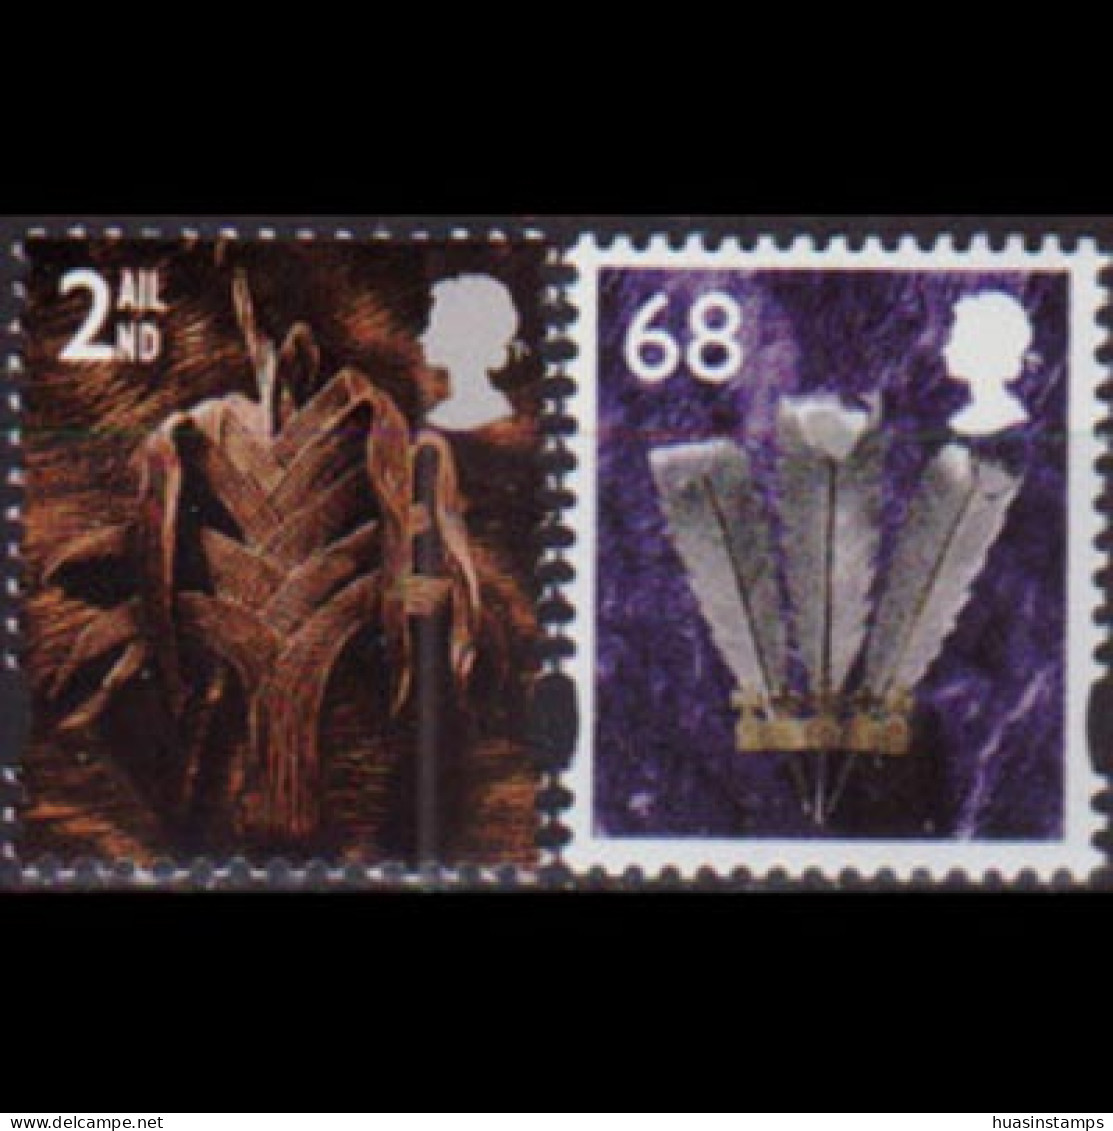 GB REGION-WALES 2002 - Scott# 18-9 Leek/Feather 2nd-65p MNH - Pays De Galles